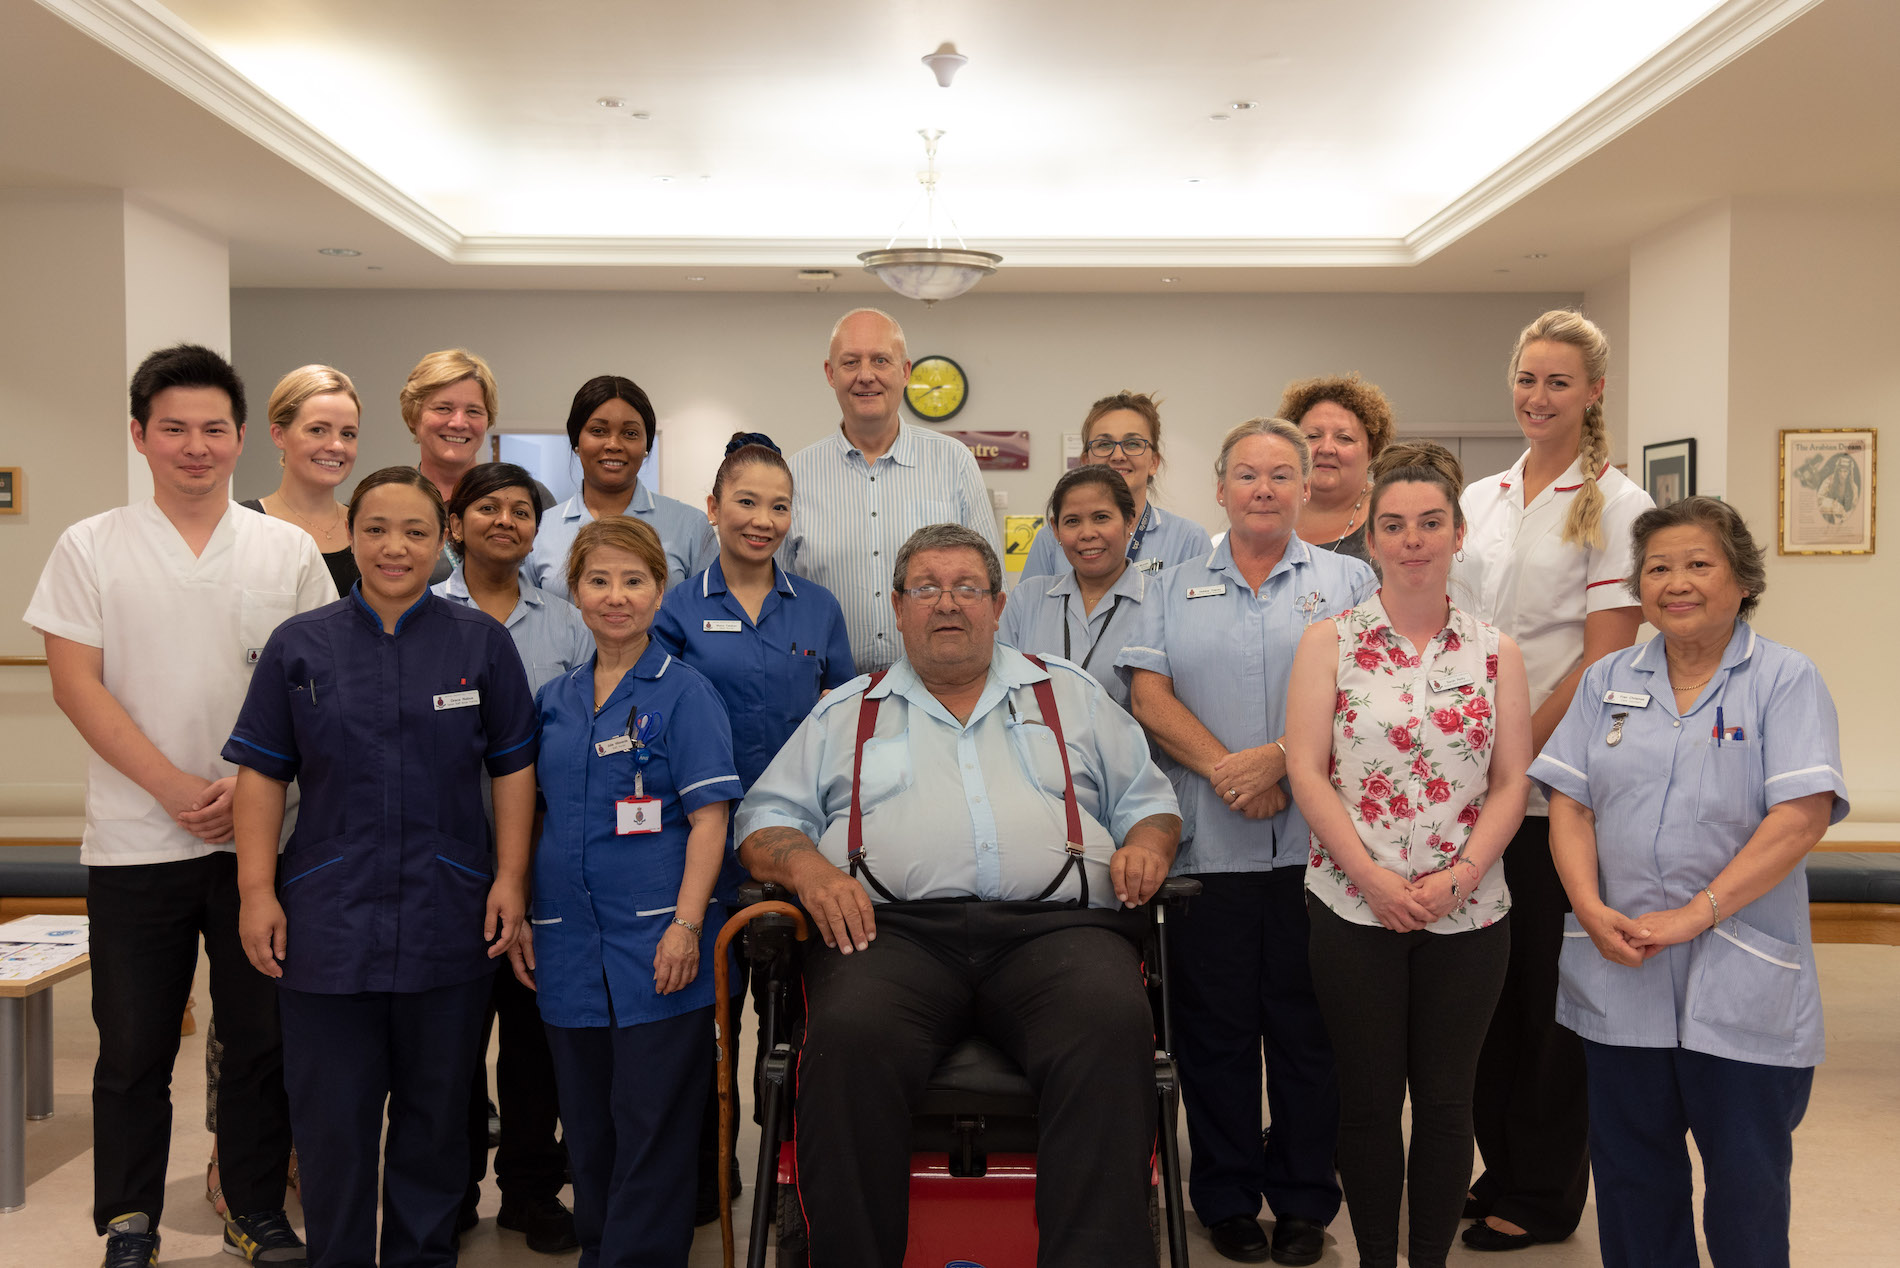 Infirmary team at the Royal Hospital Chelsea